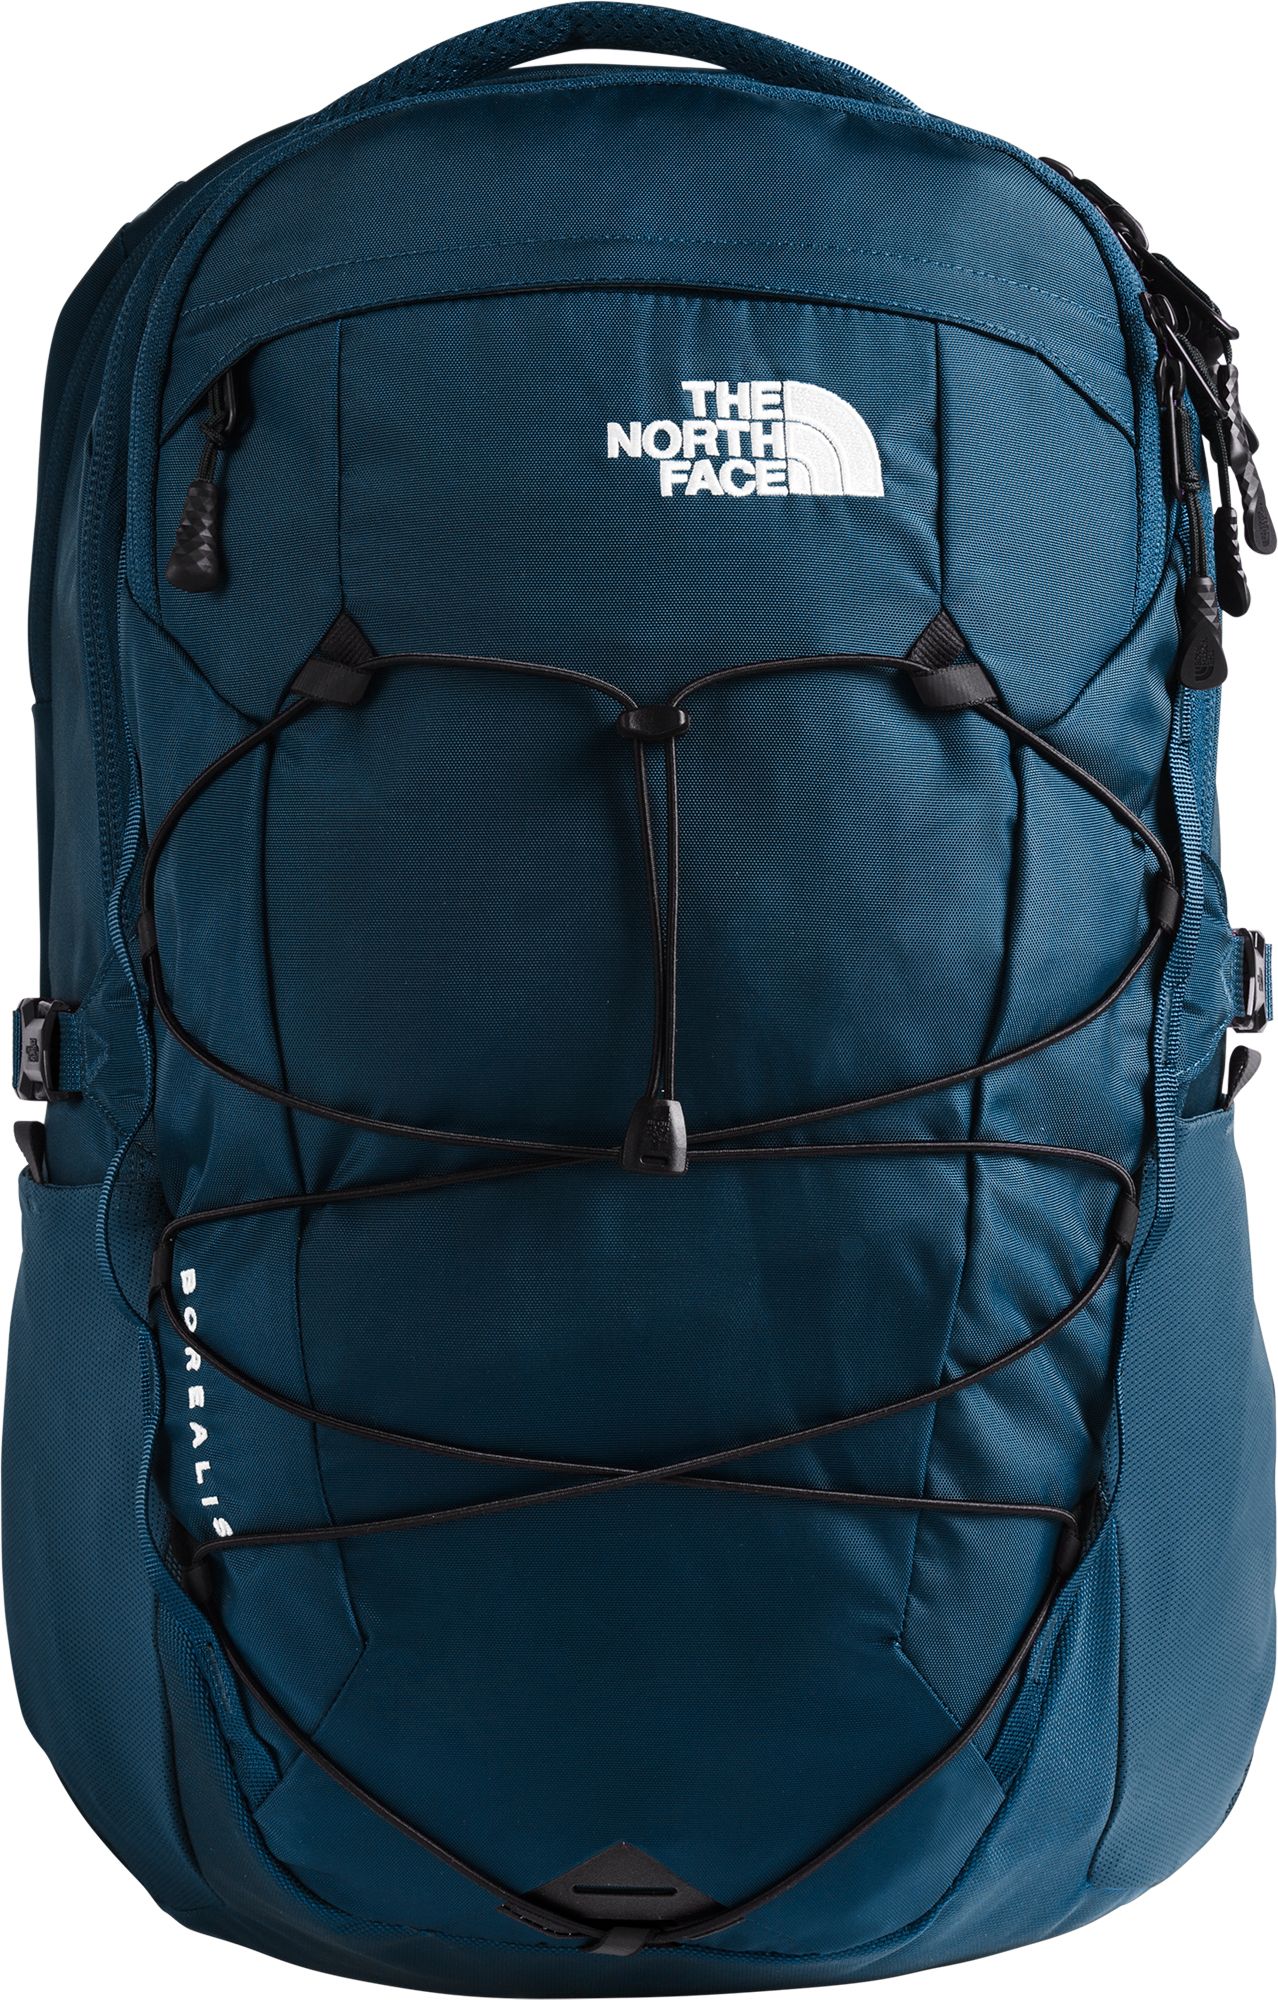 north face backpack under $50